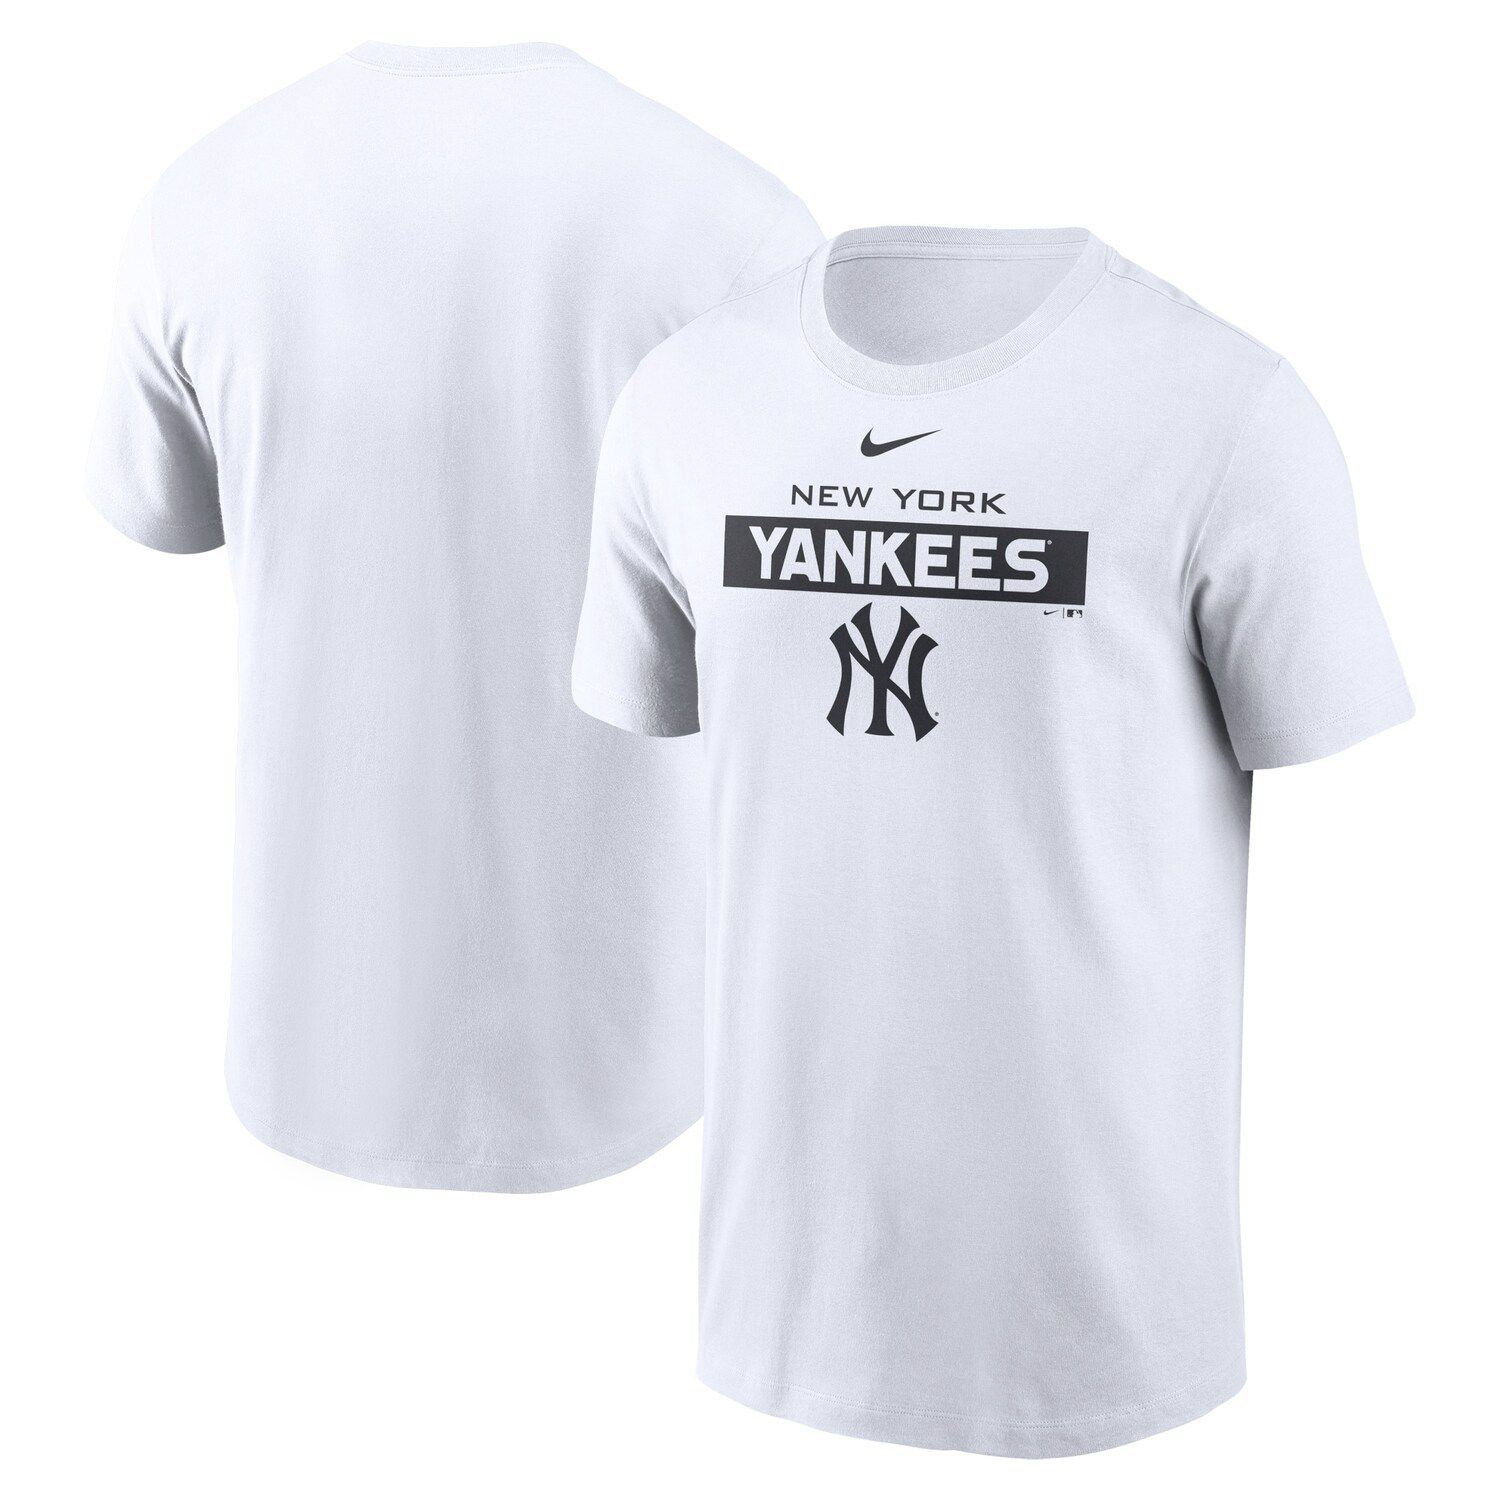 Men's Fanatics Branded White/Navy New York Yankees Backdoor